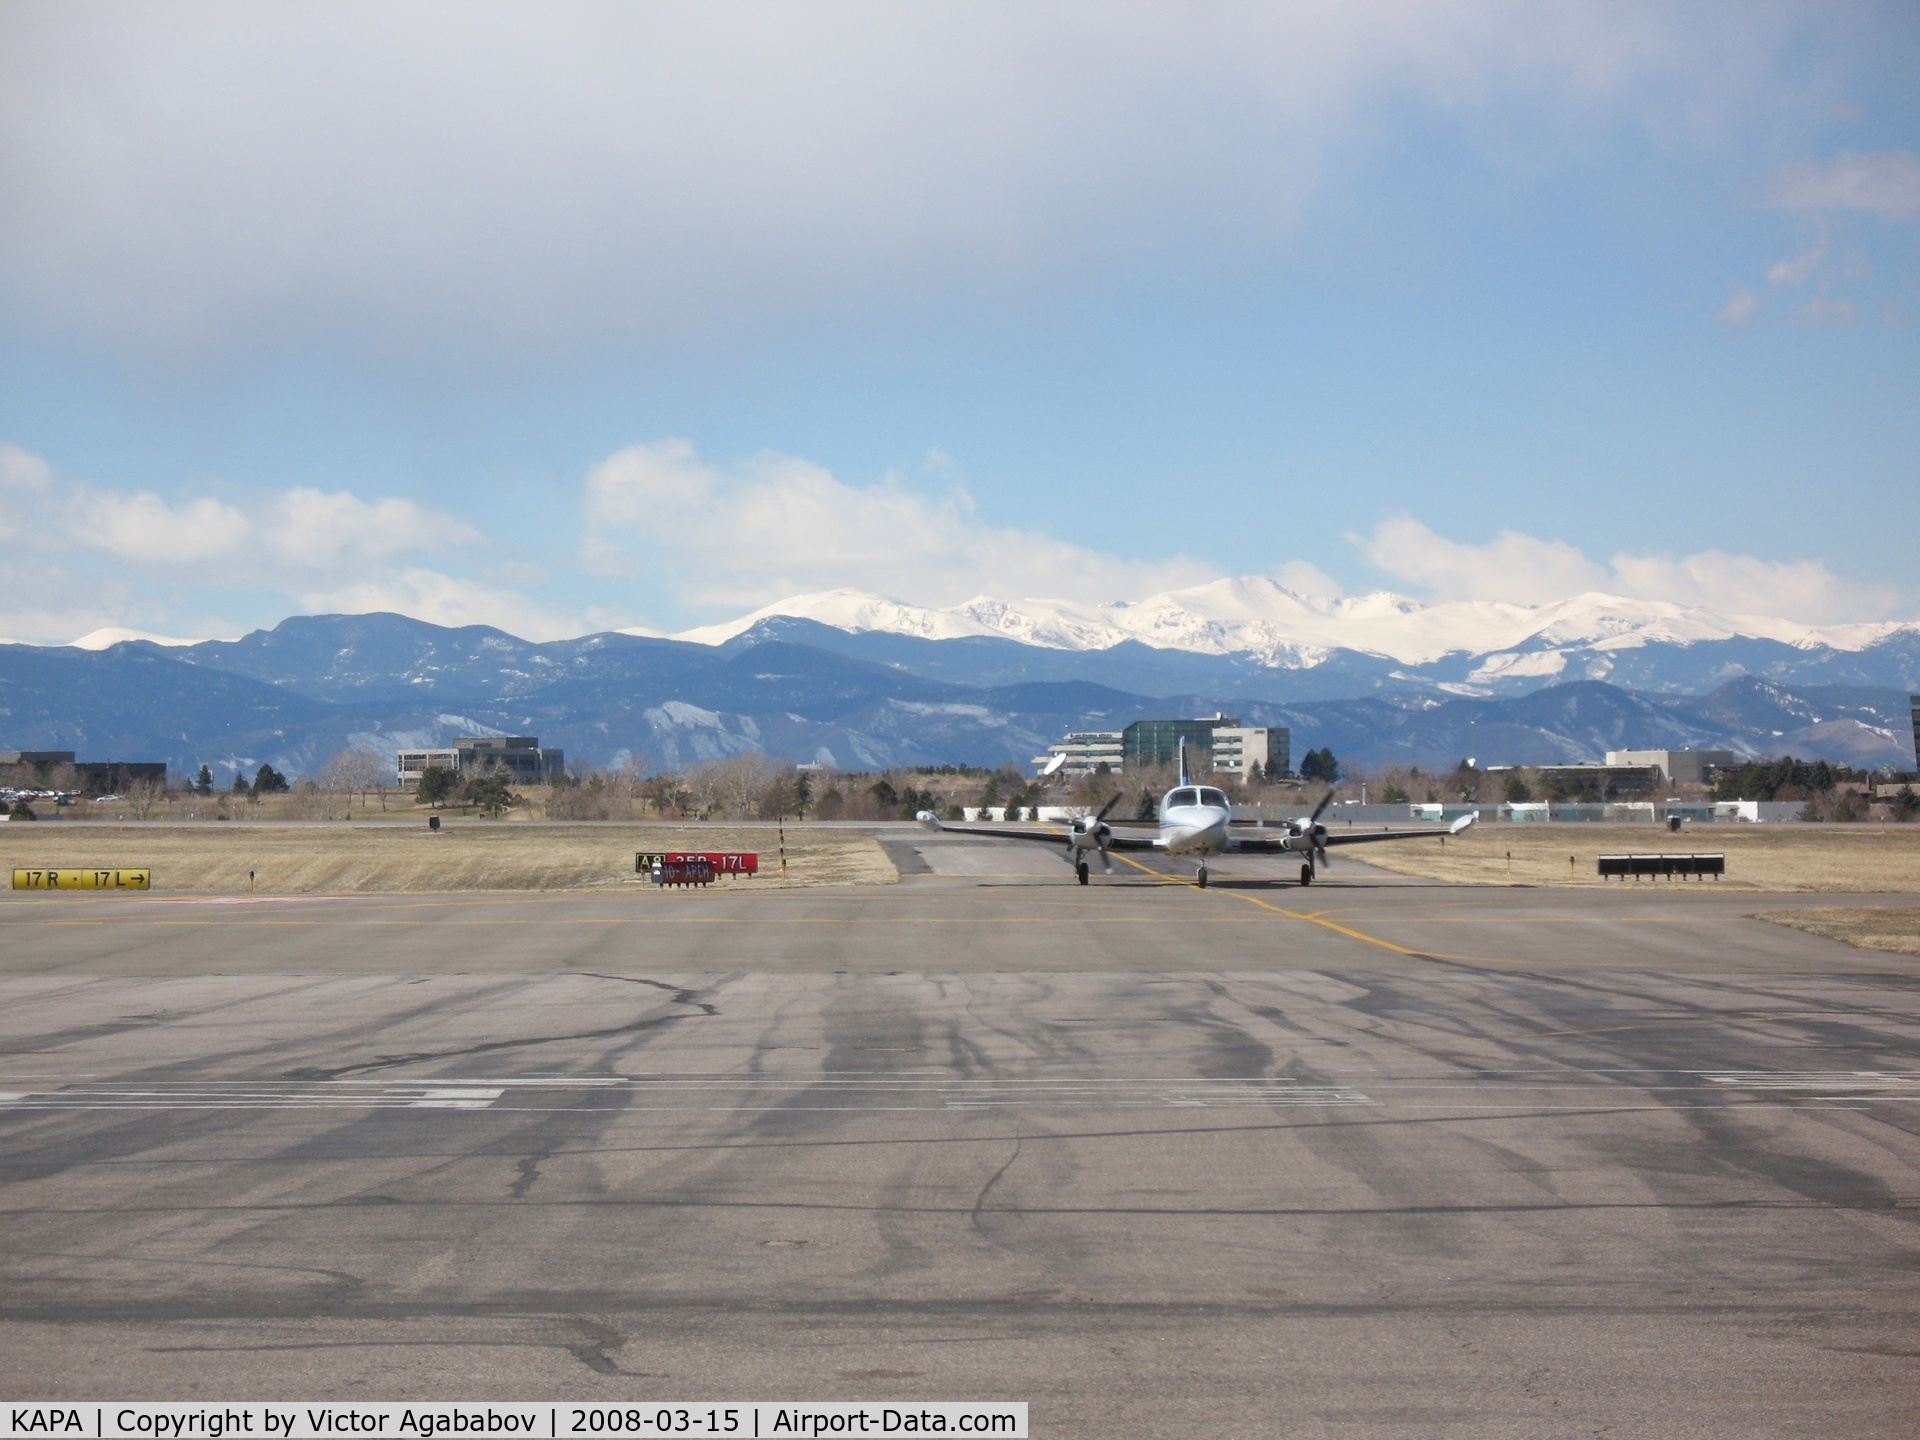 Centennial Airport (APA) - View on the tarmac